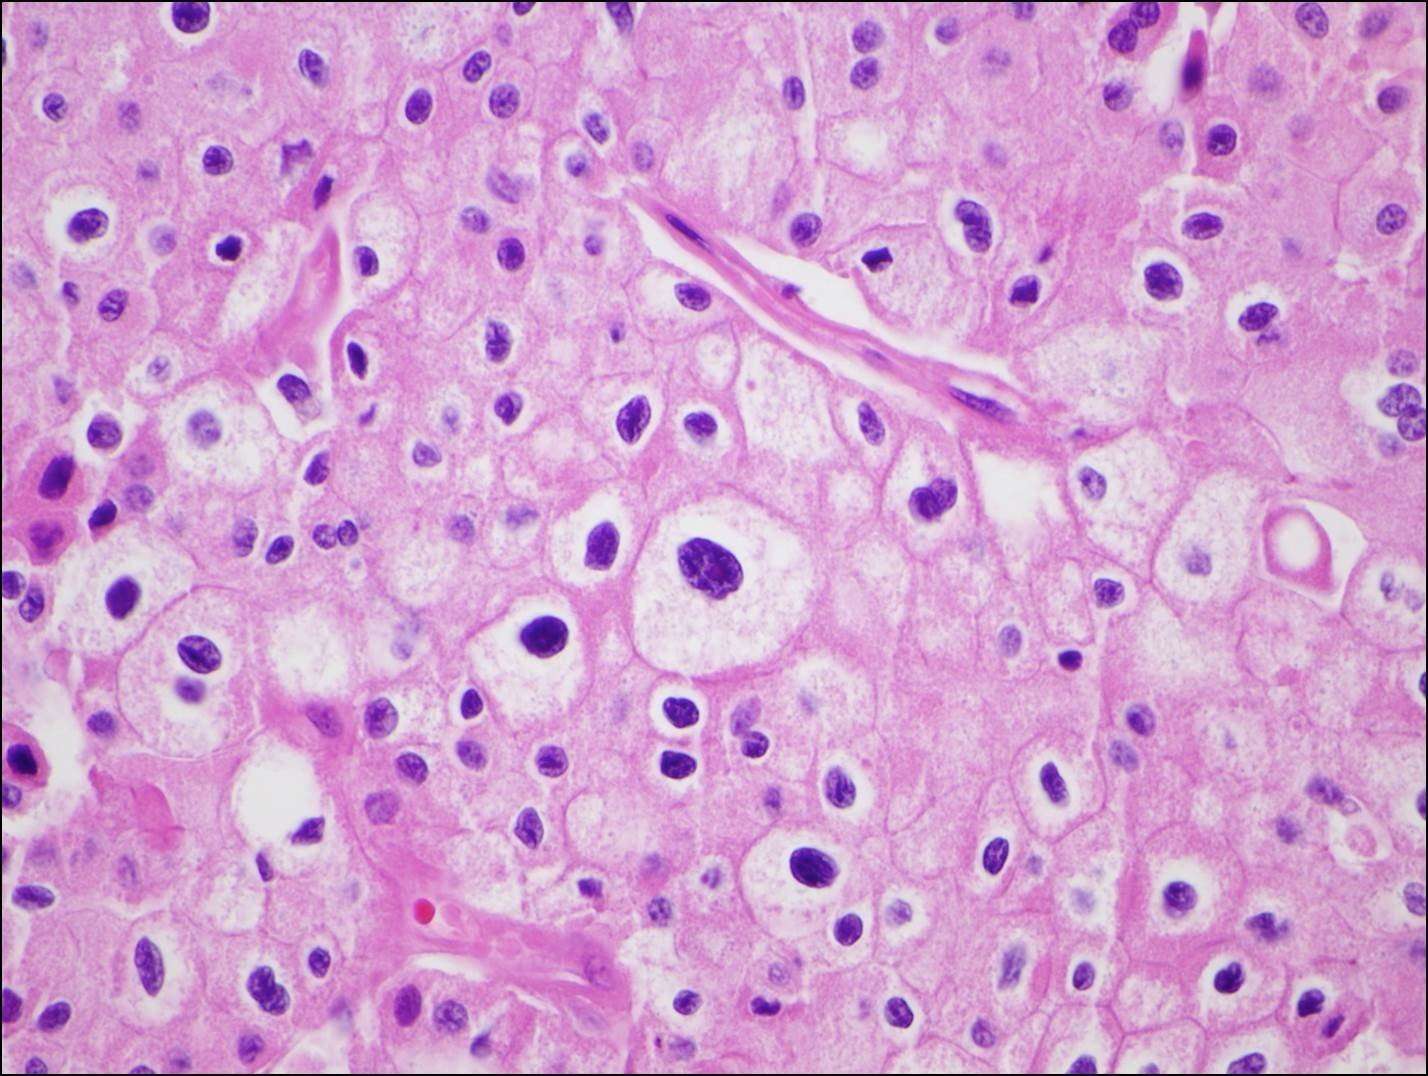 Chromophobe renal cell carcinoma